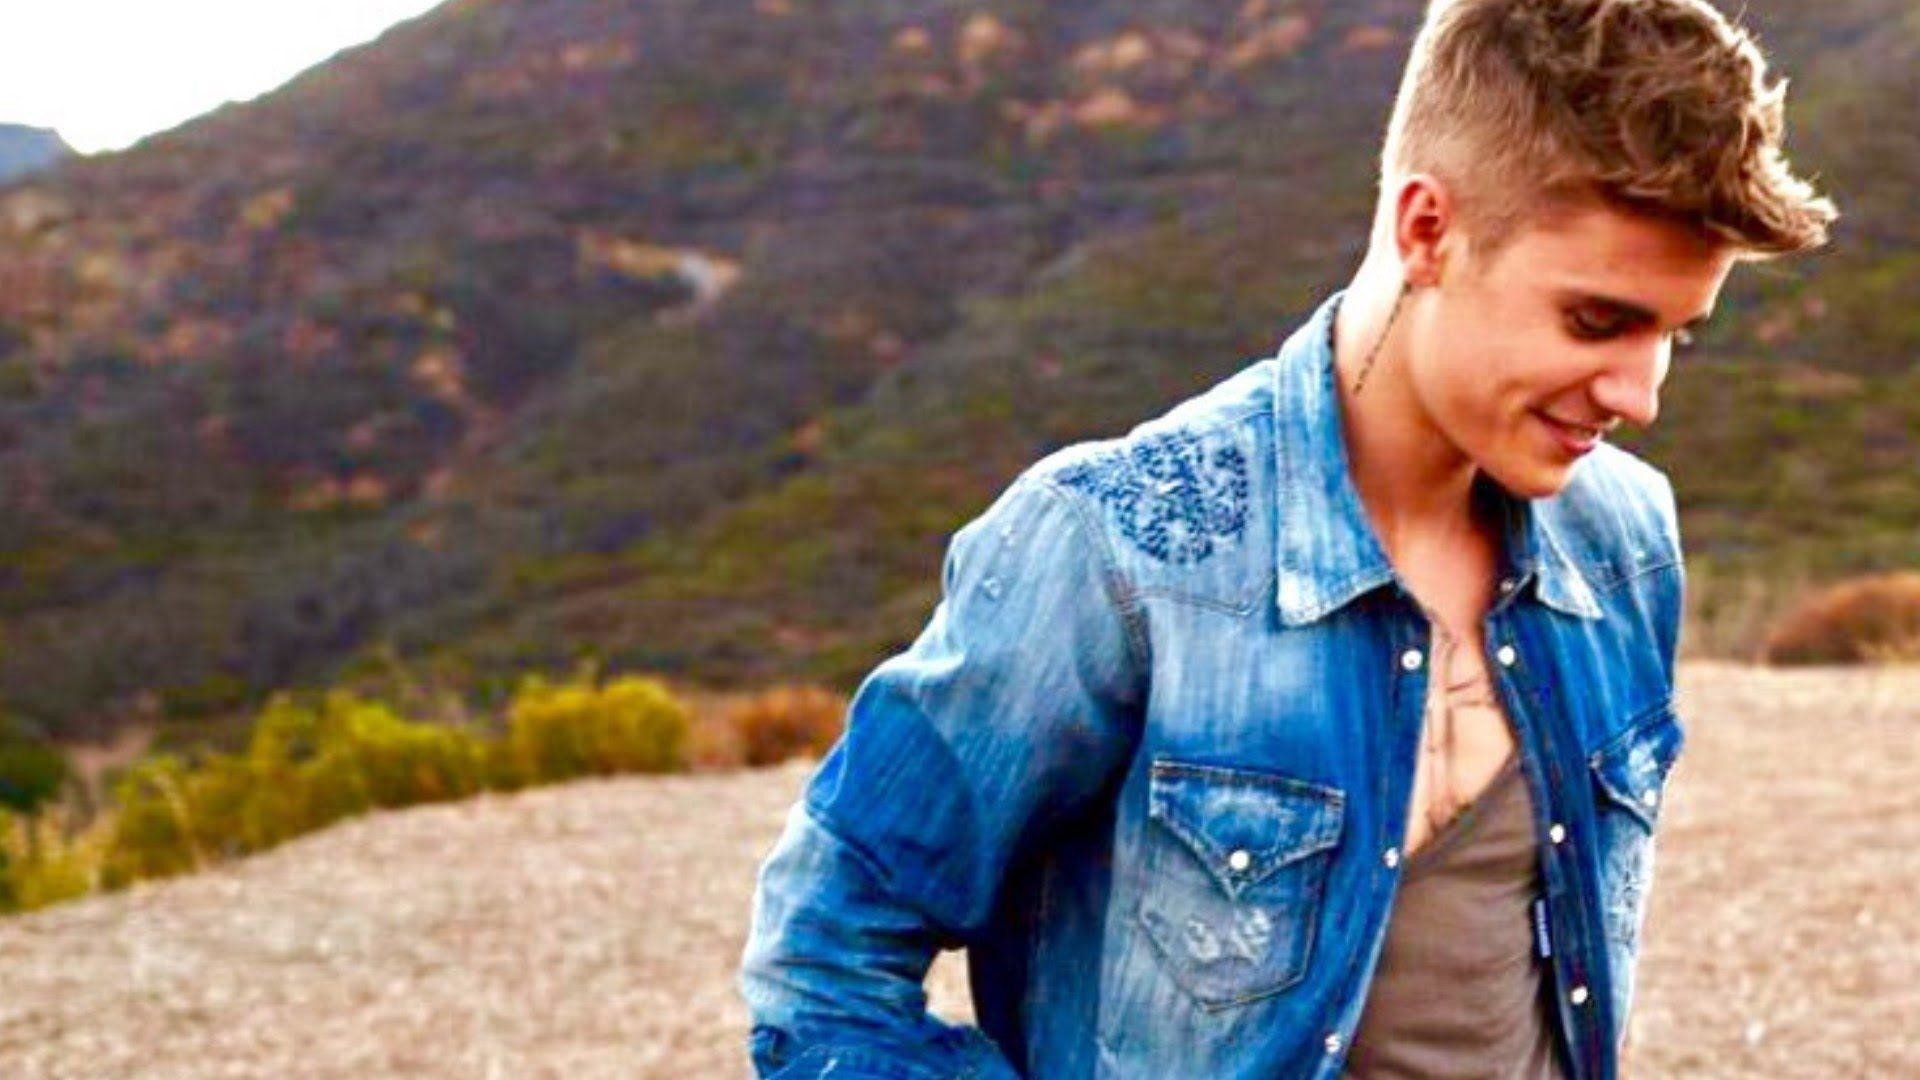 Free download Justin Bieber Wallpaper HD 2017 [1920x1080] for your Desktop,  Mobile & Tablet | Explore 99+ Justin Bieber 2017 Wallpapers | Justin Bieber  Wallpaper, Justin Bieber Wallpapers 2017, Justin Bieber New Wallpapers 2017